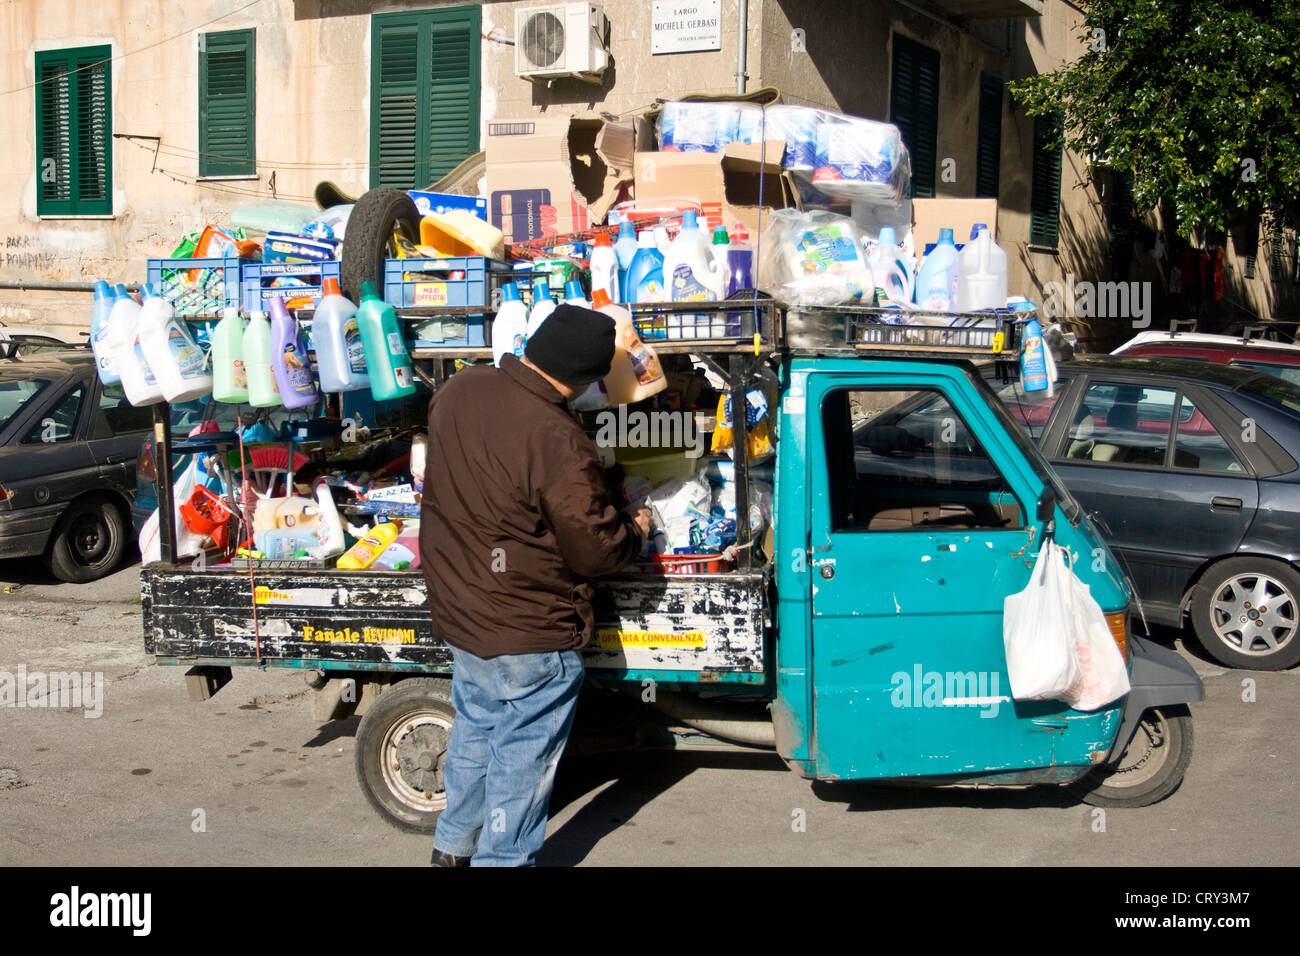 Street scene: man selling goods in a mini van Piaggio Ape, Palermo, Sicily, Italy. Stock Photo